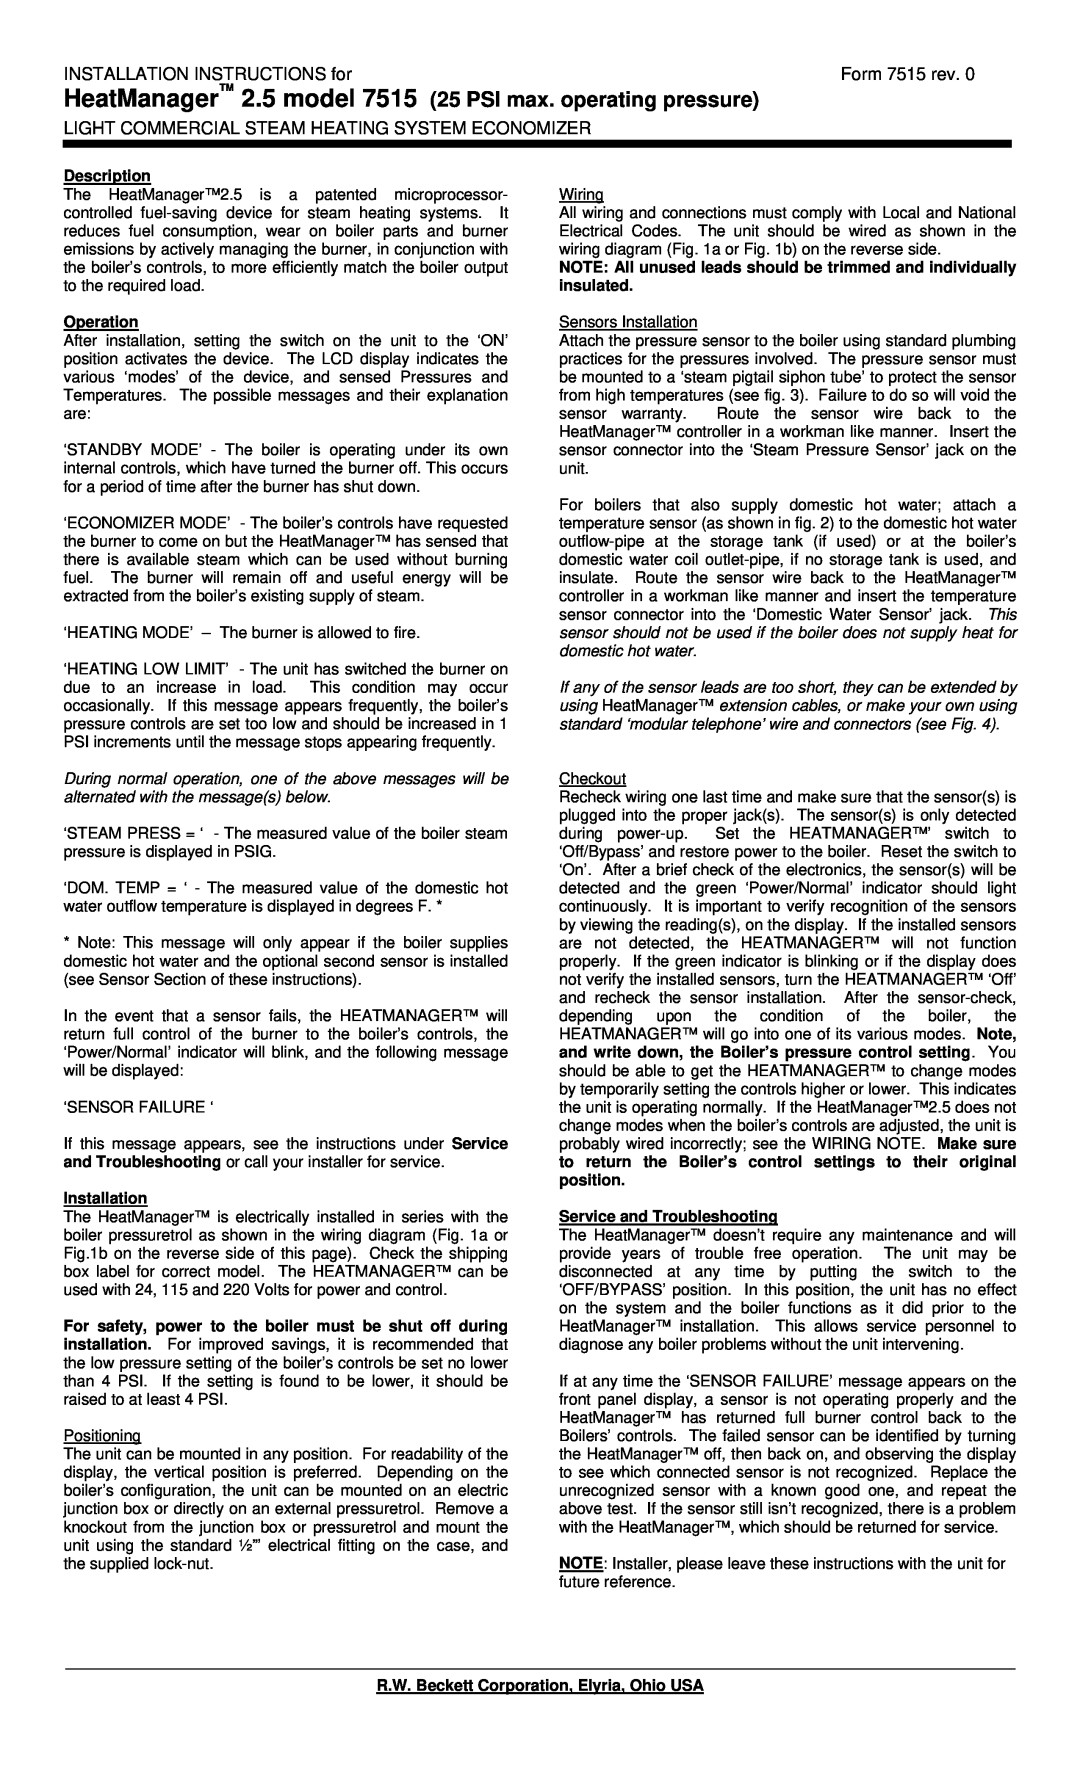 Beckett installation instructions HeatManager 2.5 model 7515 25 PSI max. operating pressure, Form 7515 rev, Description 